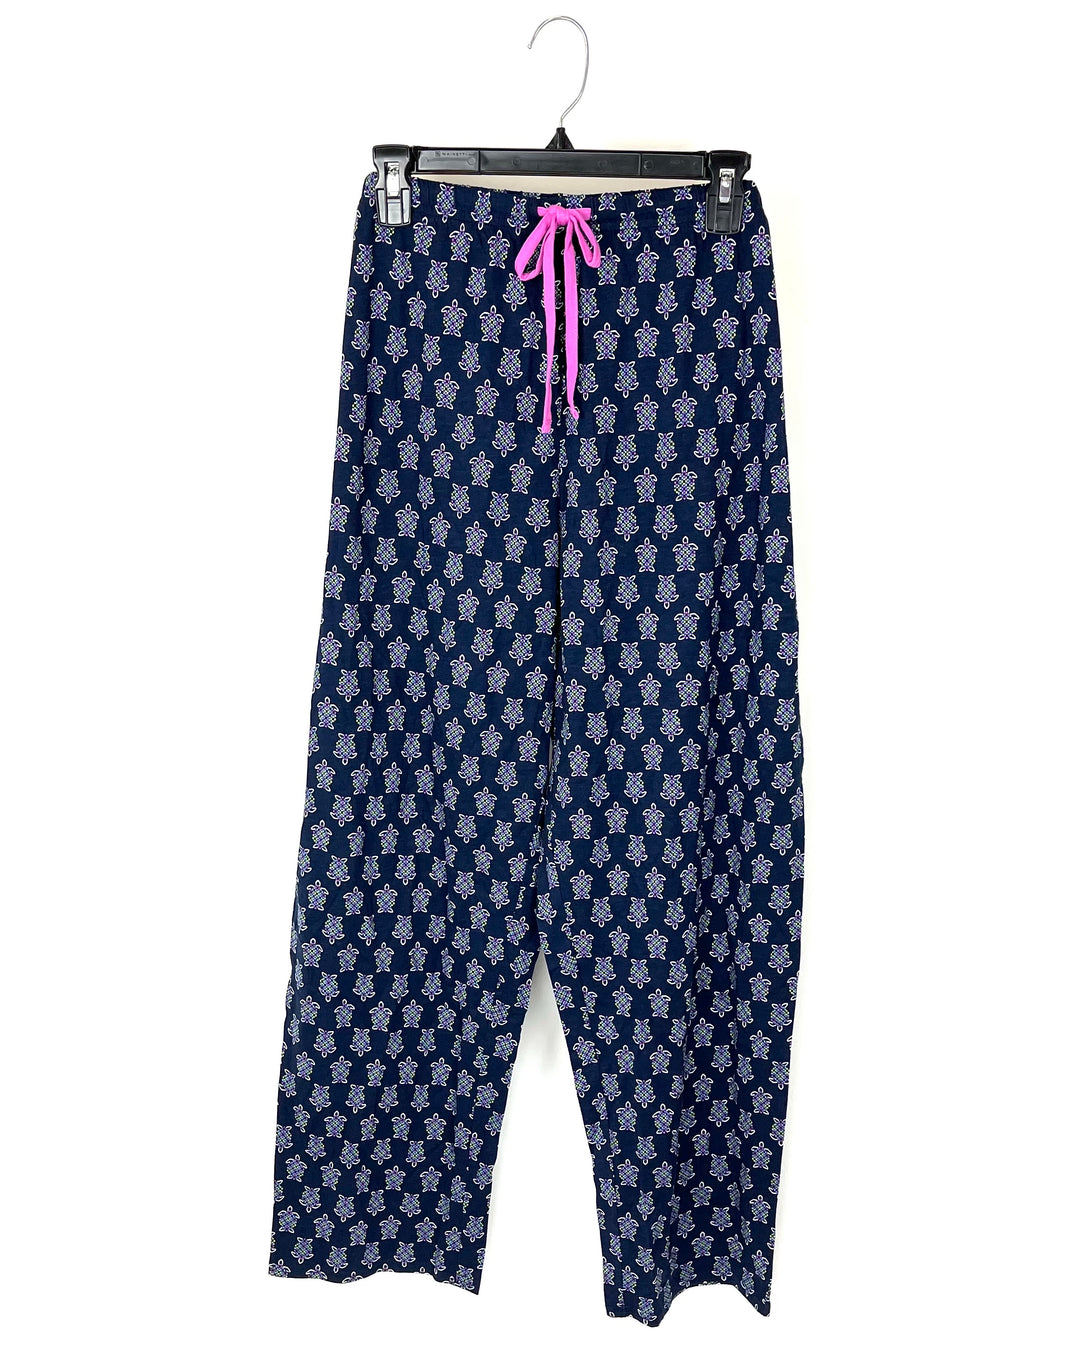 Turtle Print Pajama Pants - Small, 1X